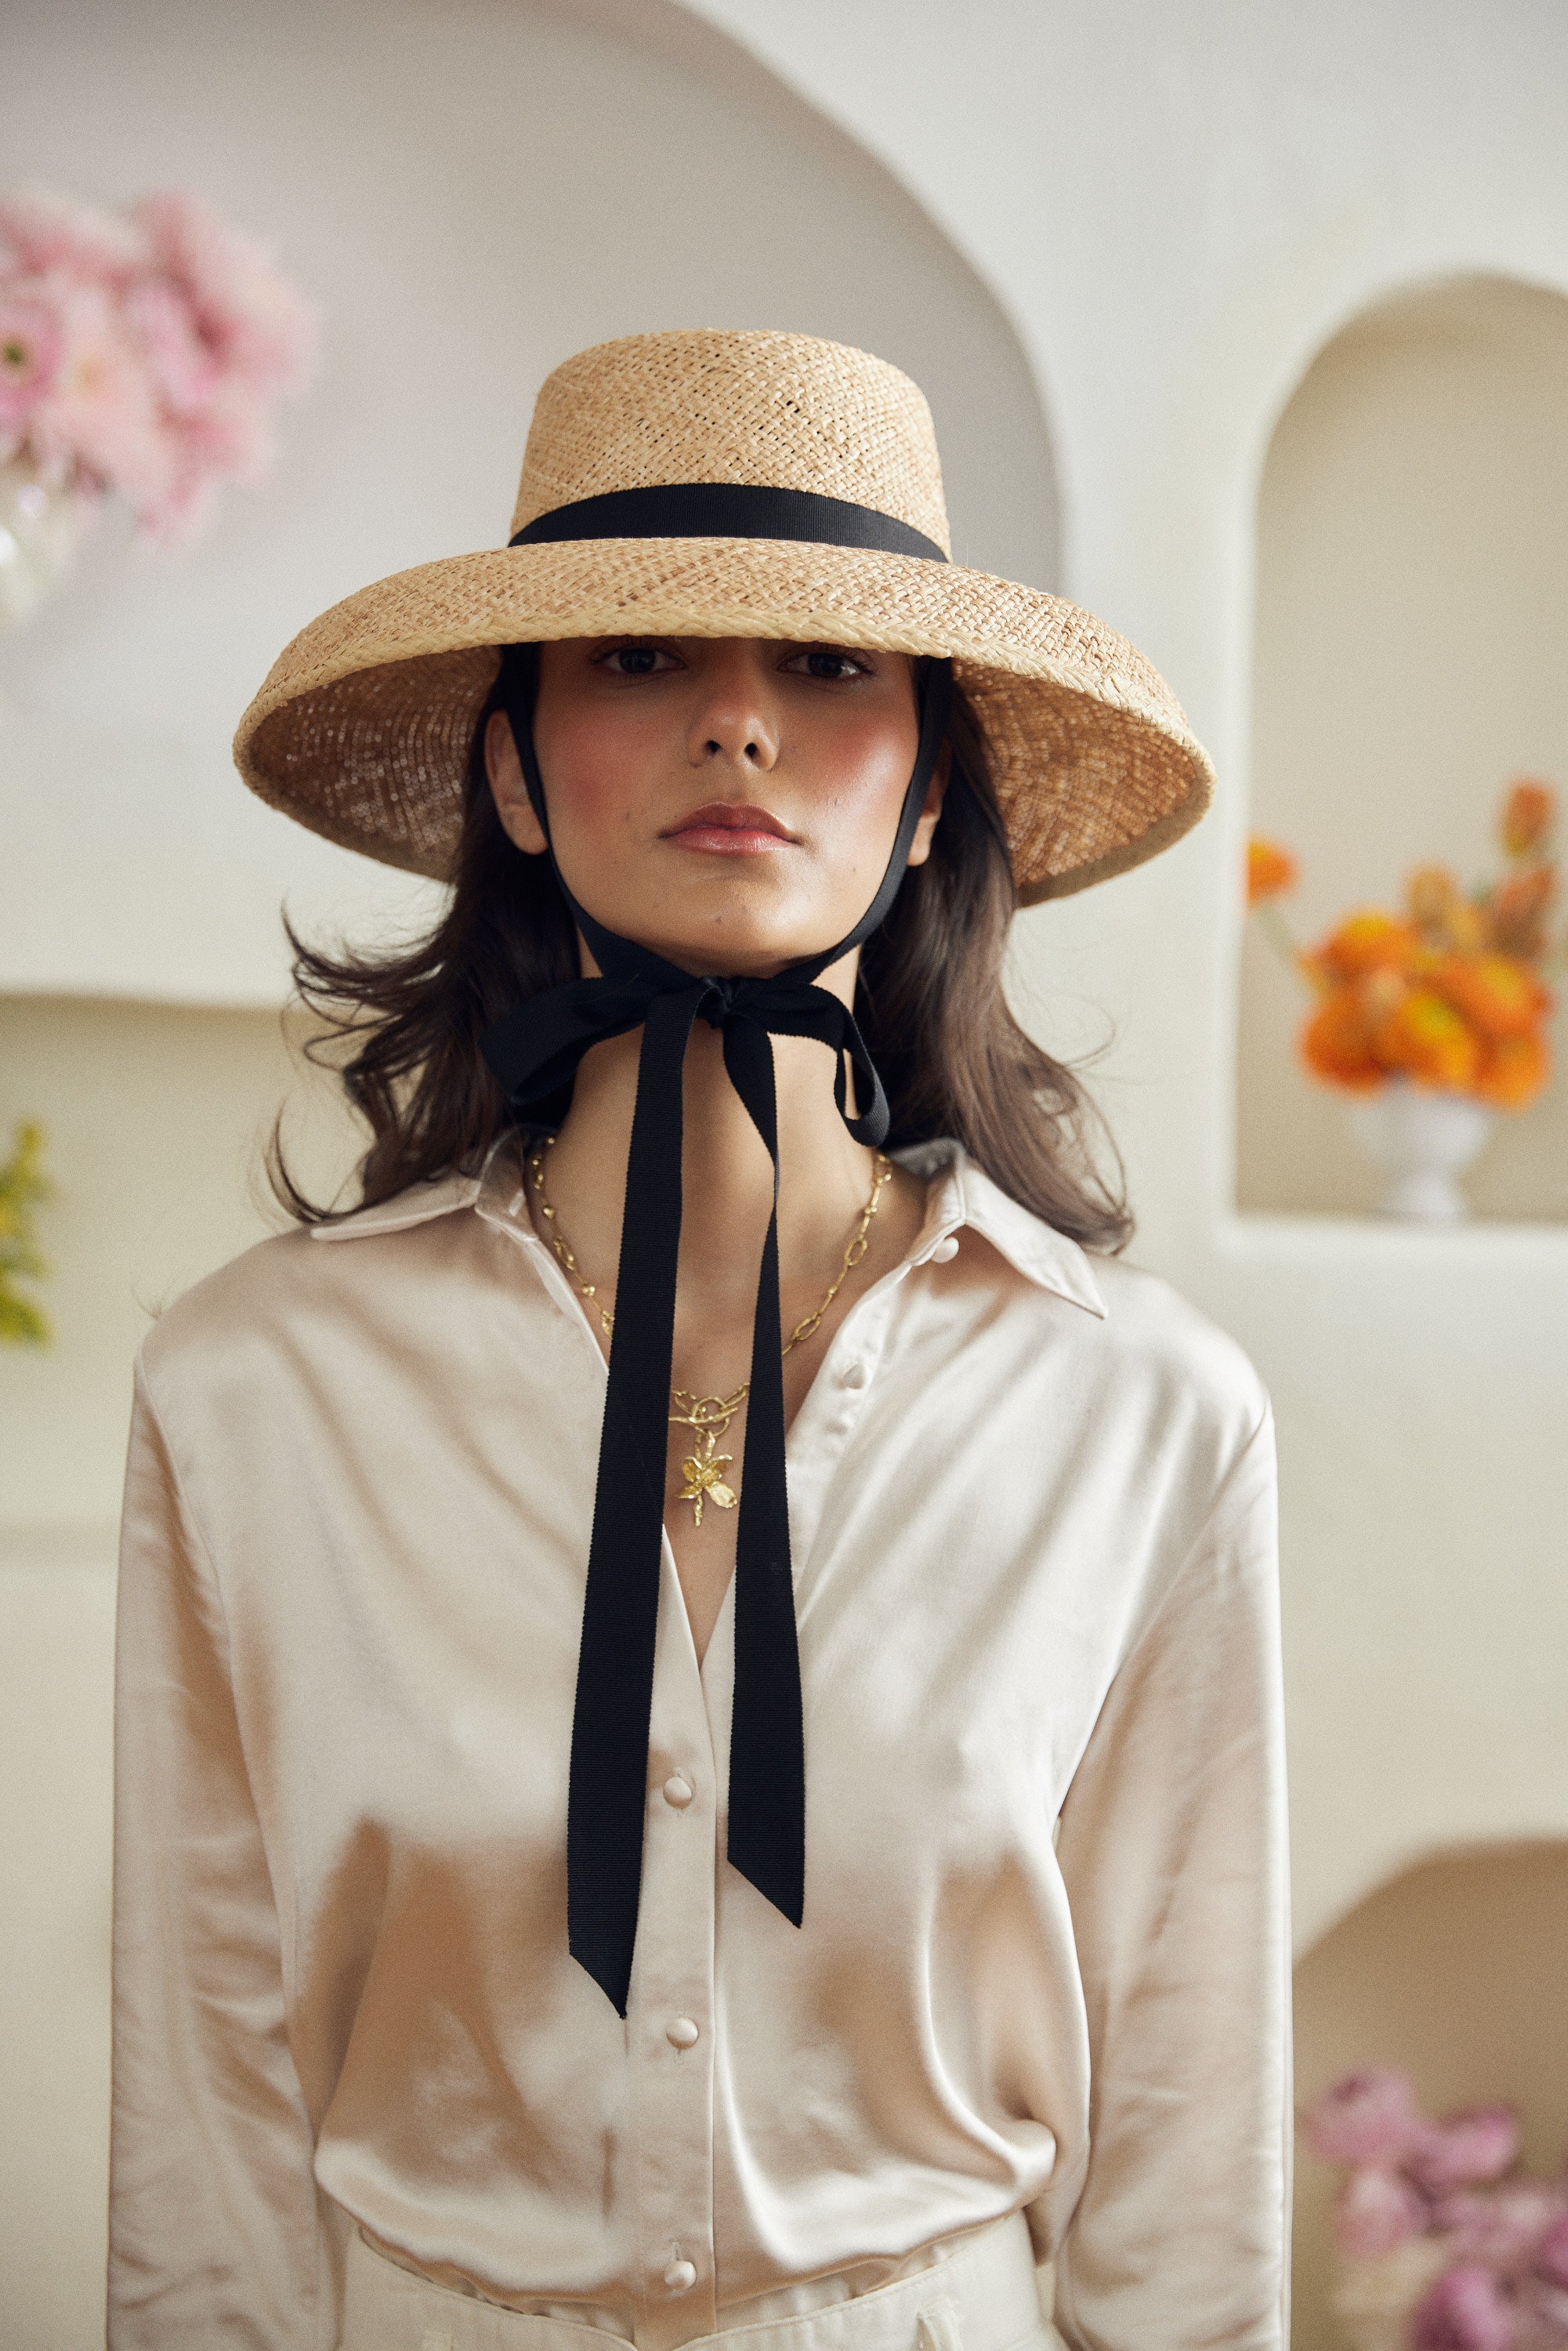 Calcarella straw hat - Detachable black grosgrain ribbon